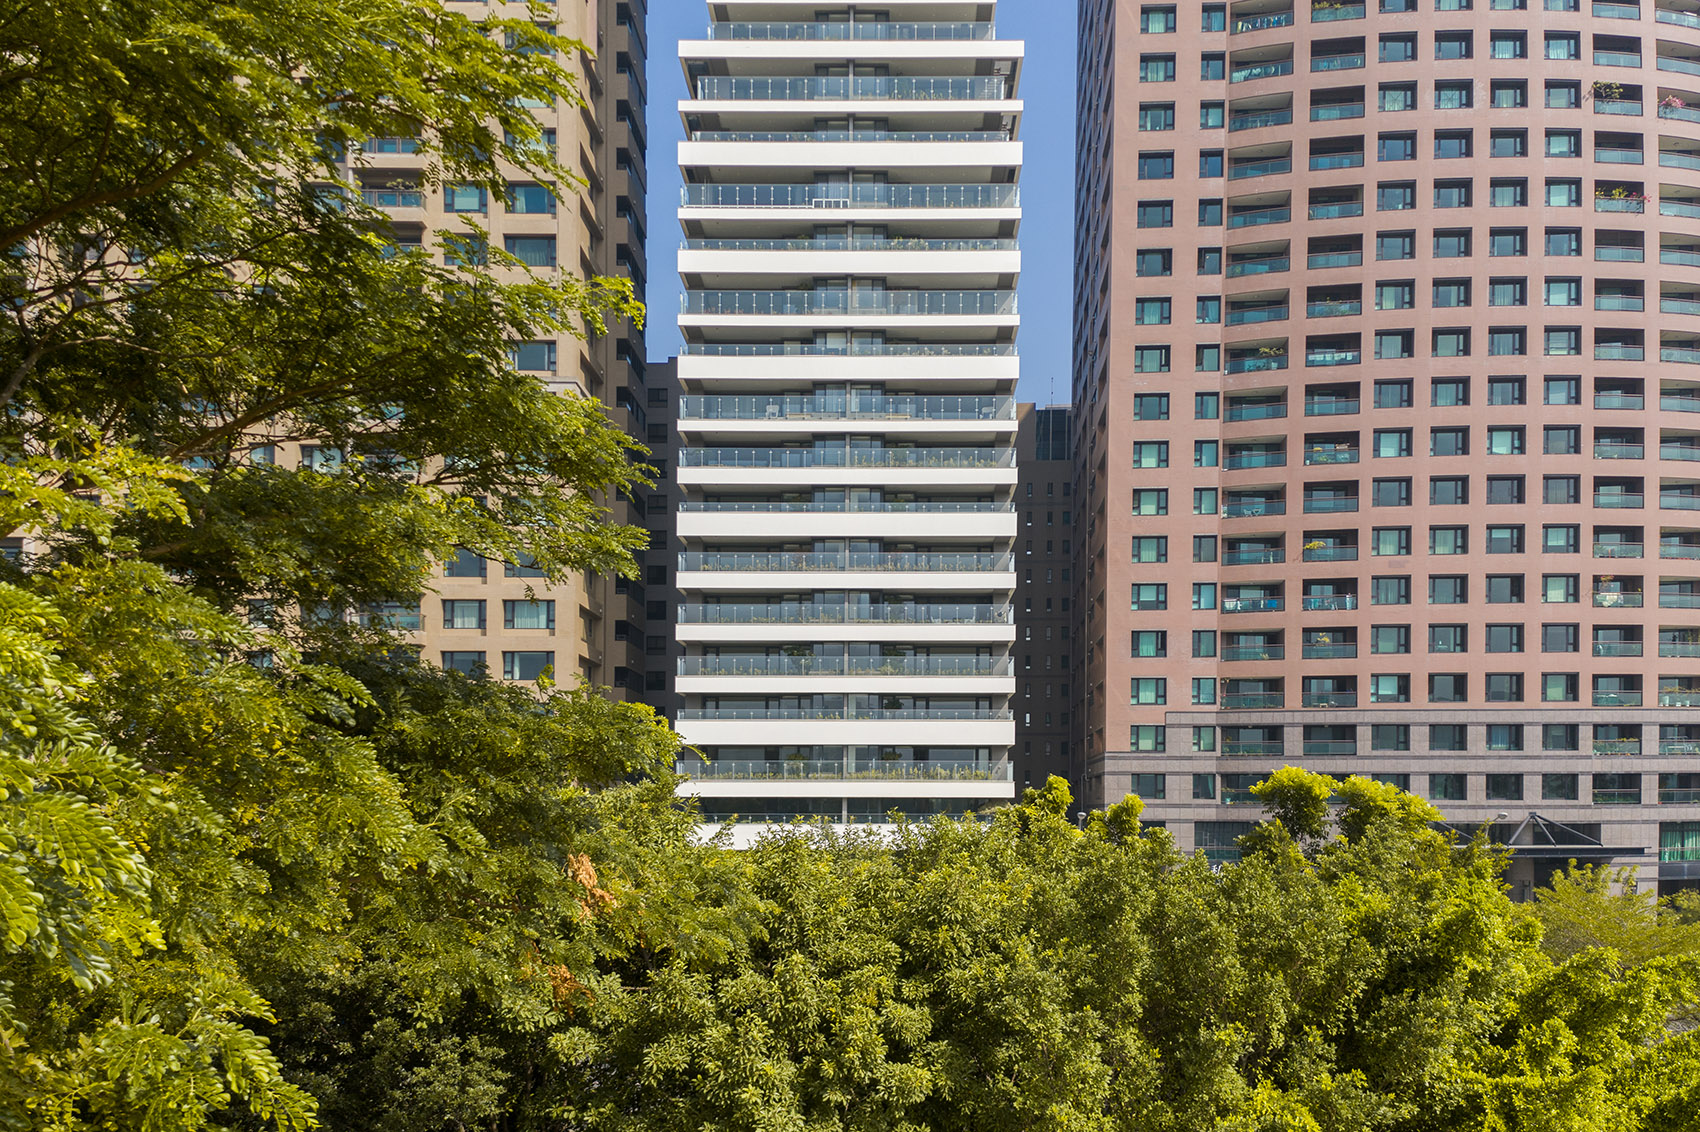 One More住宅楼，台湾/城市环境中的自然生活-49